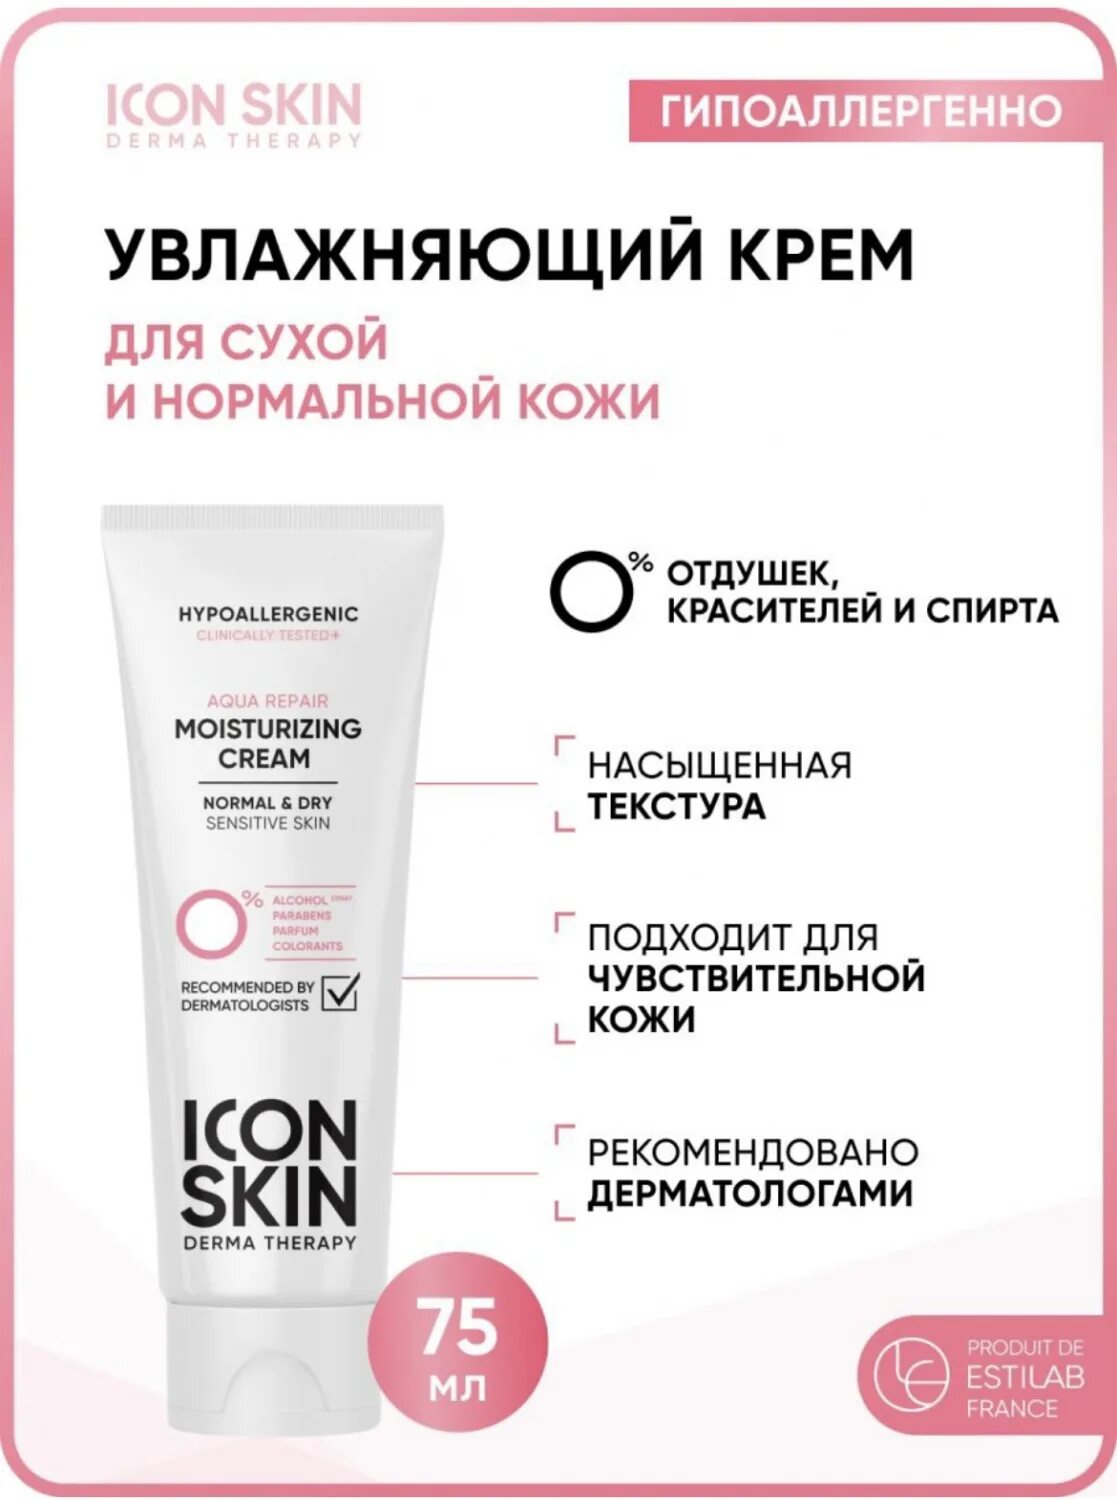 Строение крема icon Skin. Строение упаковки крема icon Skin. Маска Clio Derm 75 мл. Icon skin aqua repair